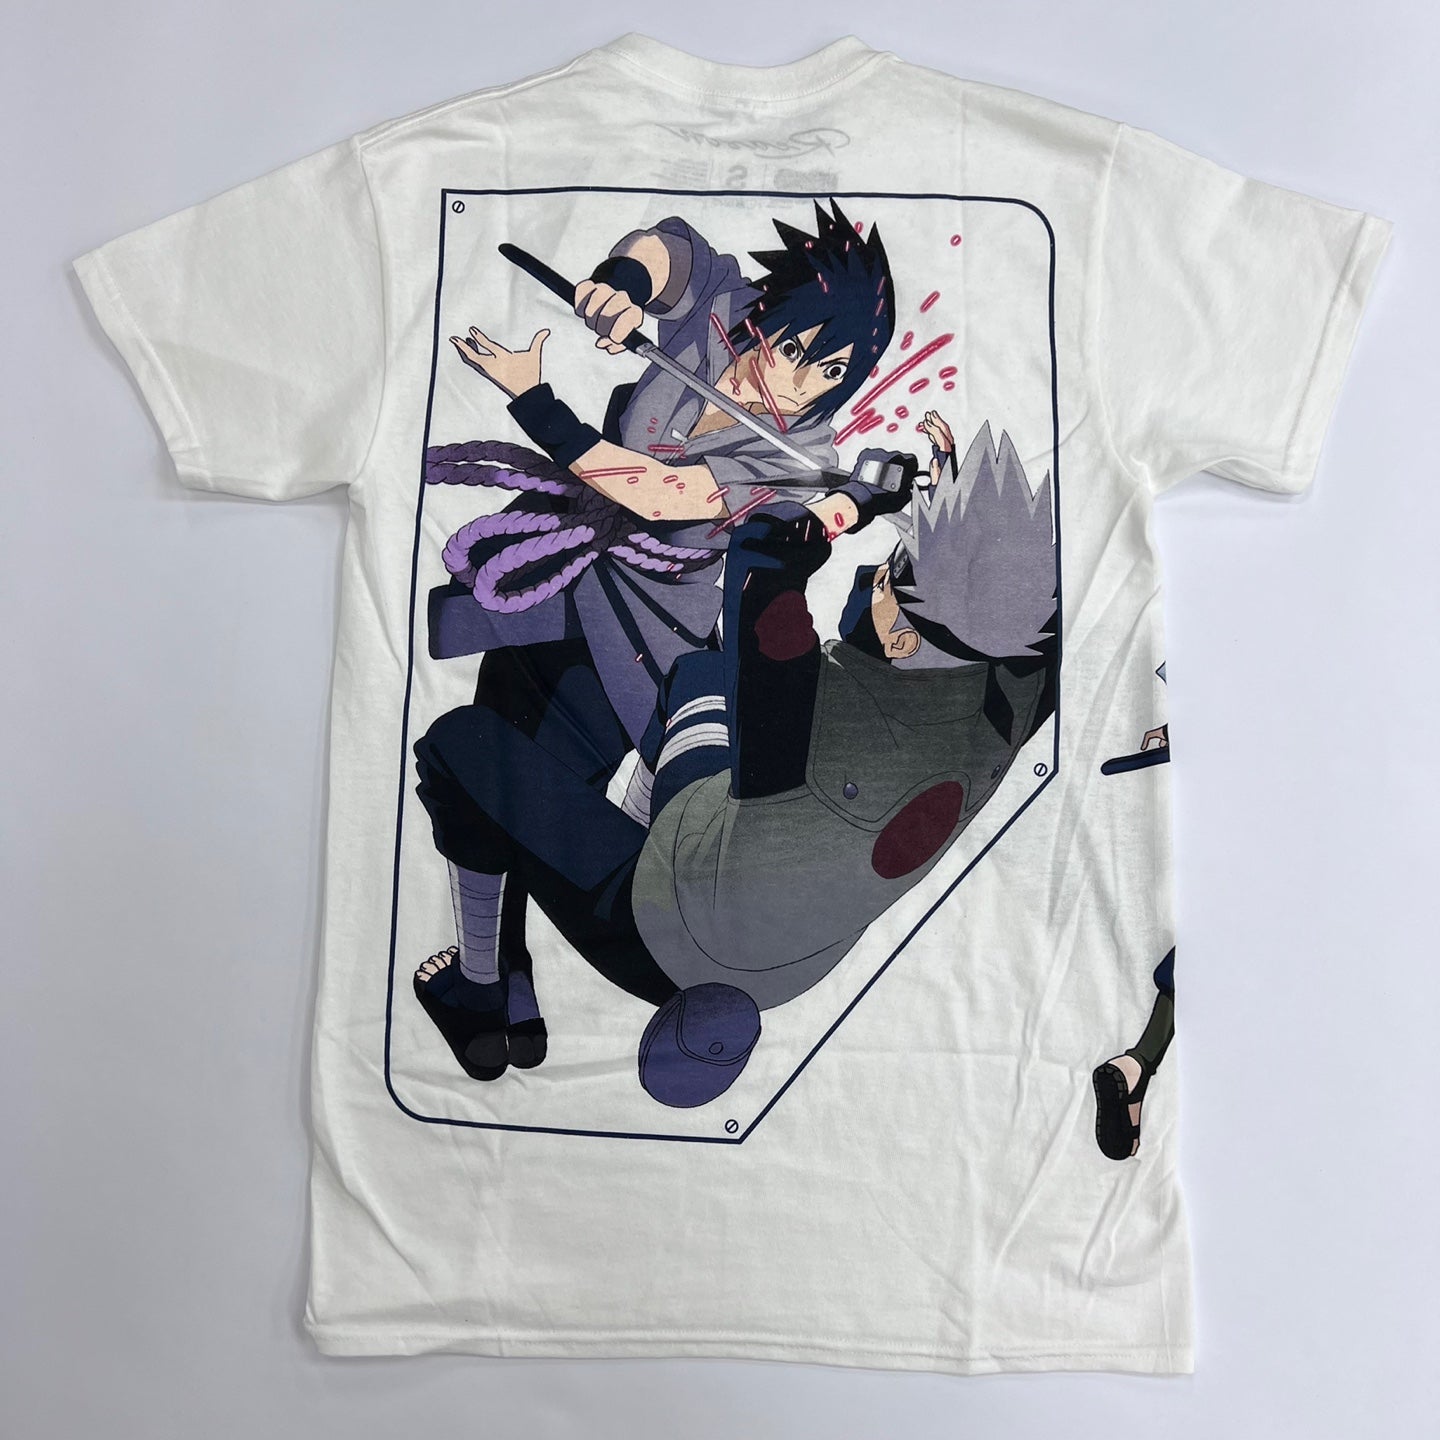 REASON Naruto Sippuden Anime T-Shirt